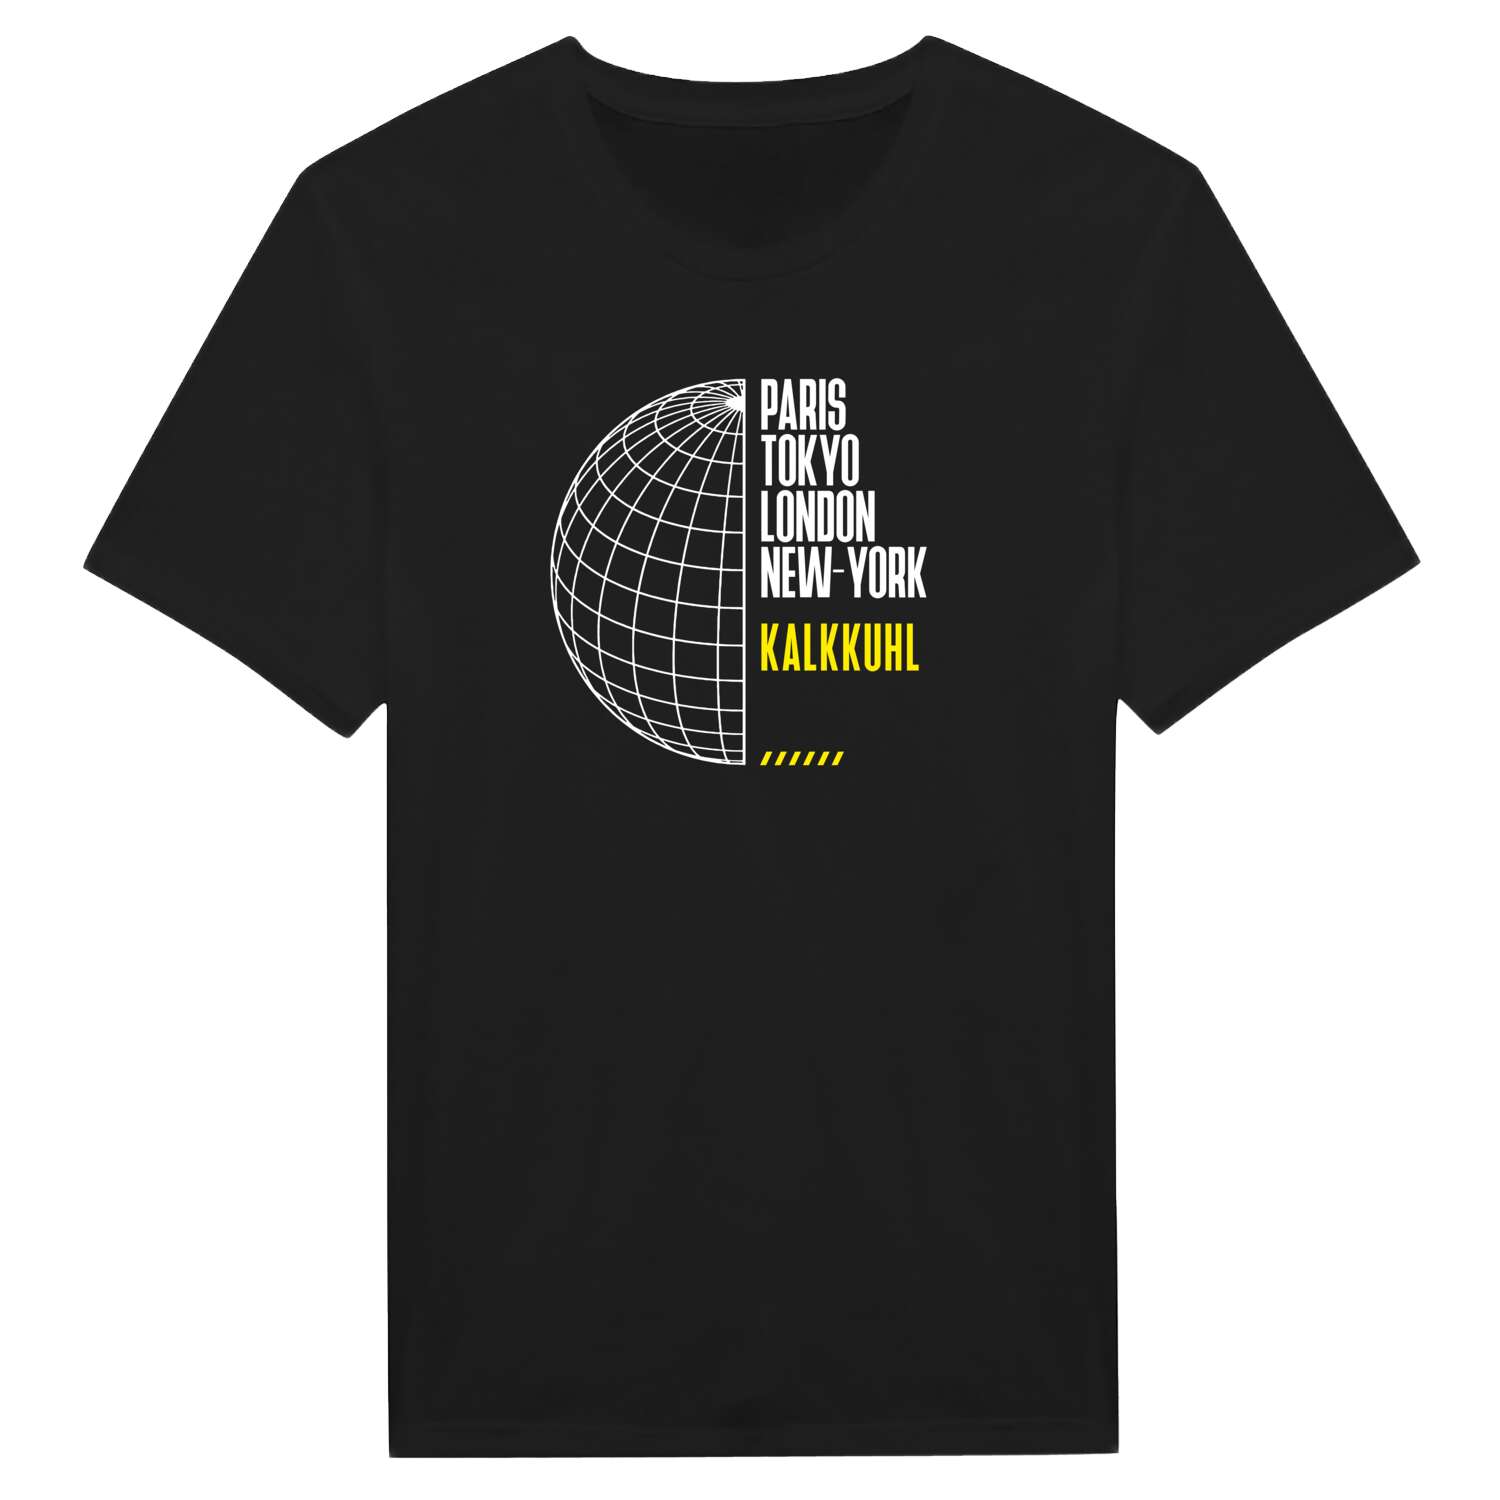 Kalkkuhl T-Shirt »Paris Tokyo London«